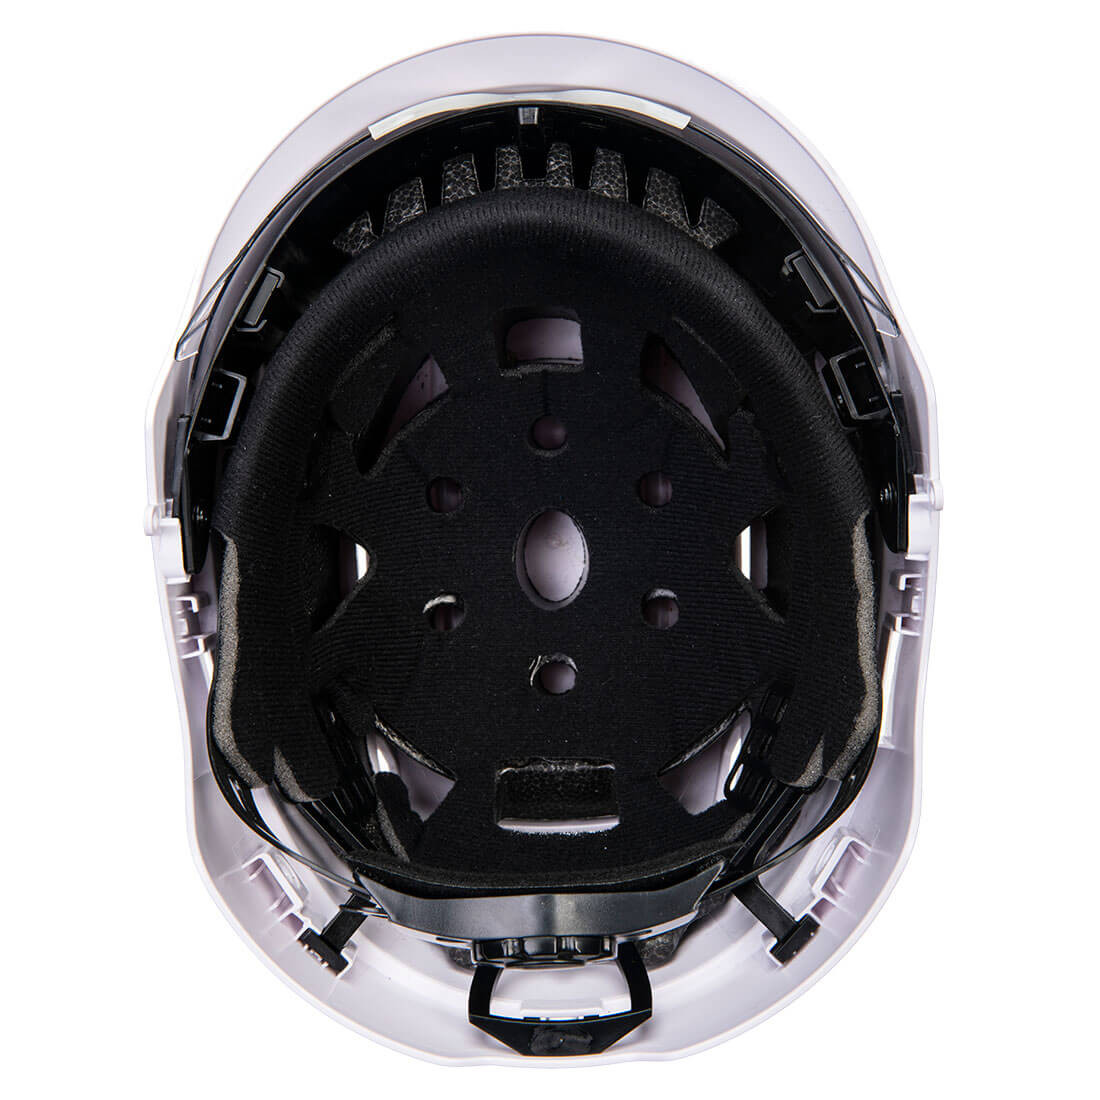 Integrated Visor Helmet - Personal protection